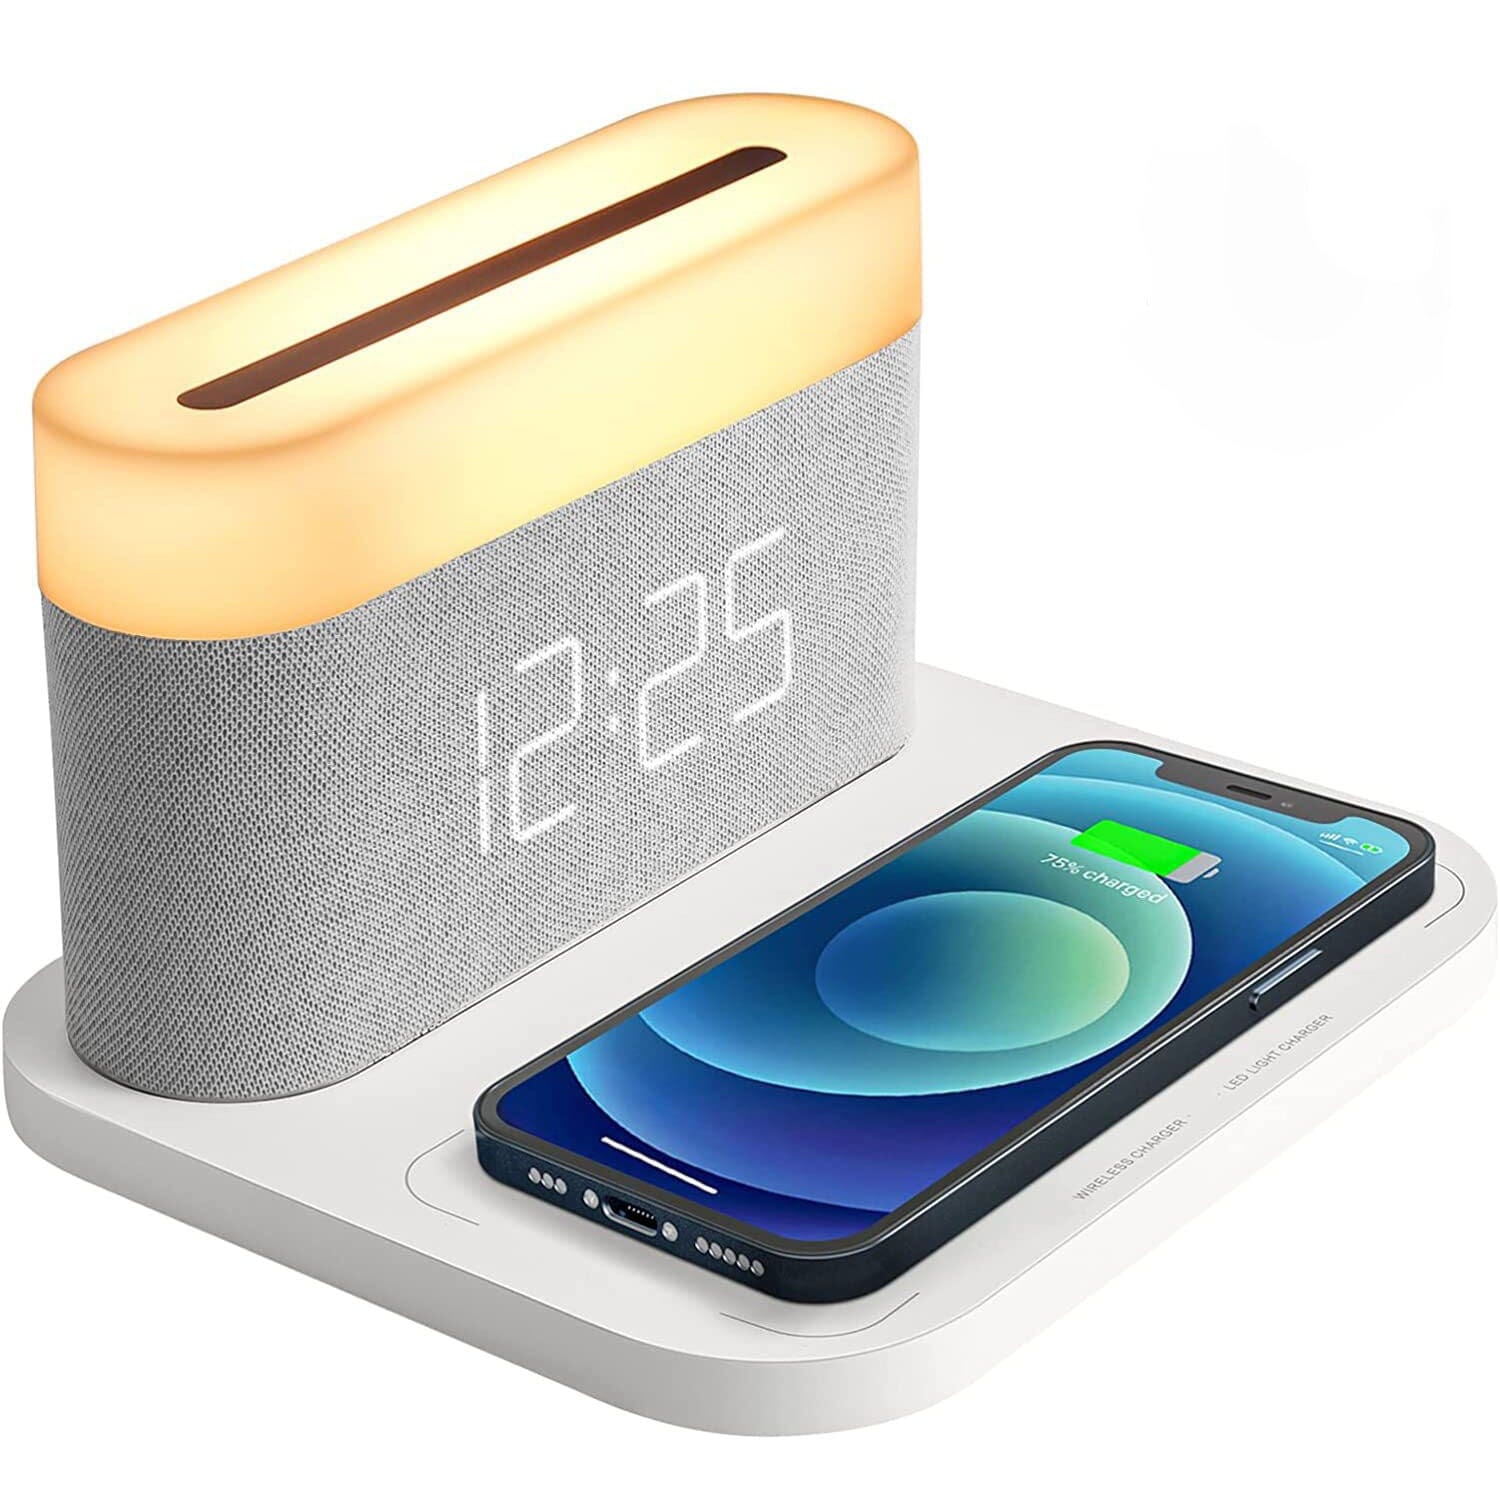 DailySale Digital Alarm Clock with Wireless Charging